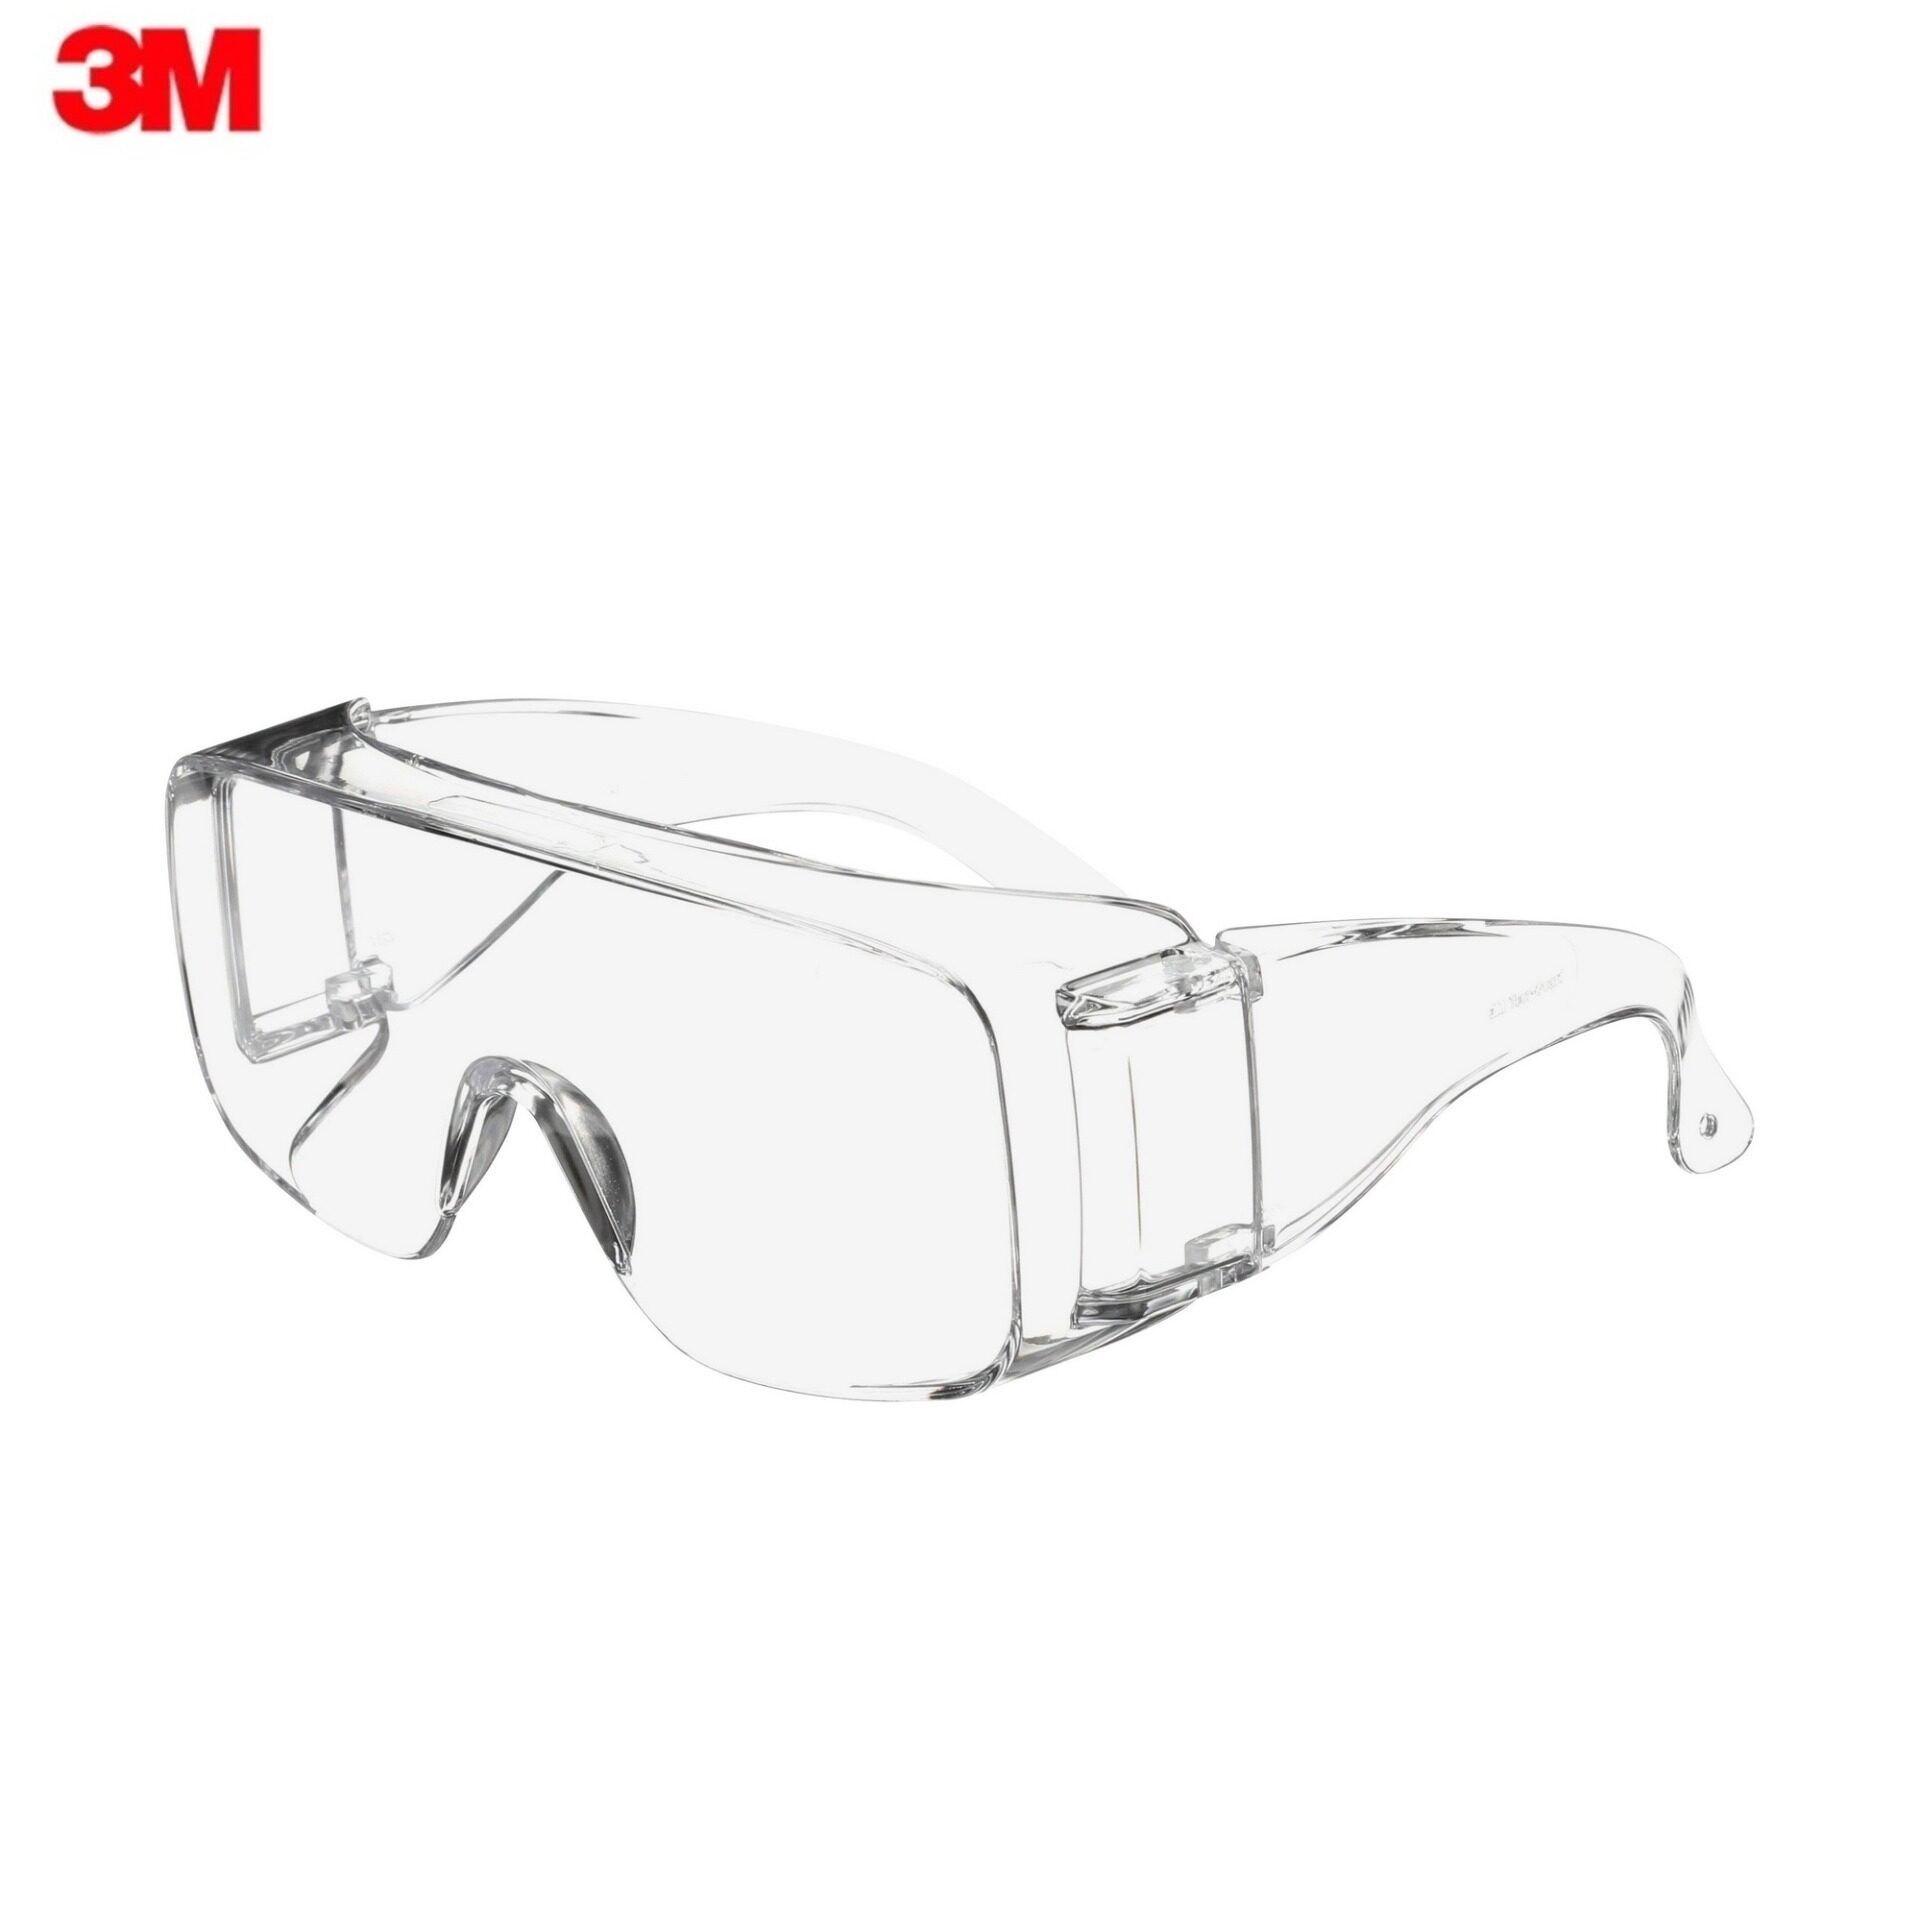 3M แว่นนิรภัย (แว่นเซฟตี้) Tour-Guard เลนส์ใส UVA-UVB Safety Eyewear Protection